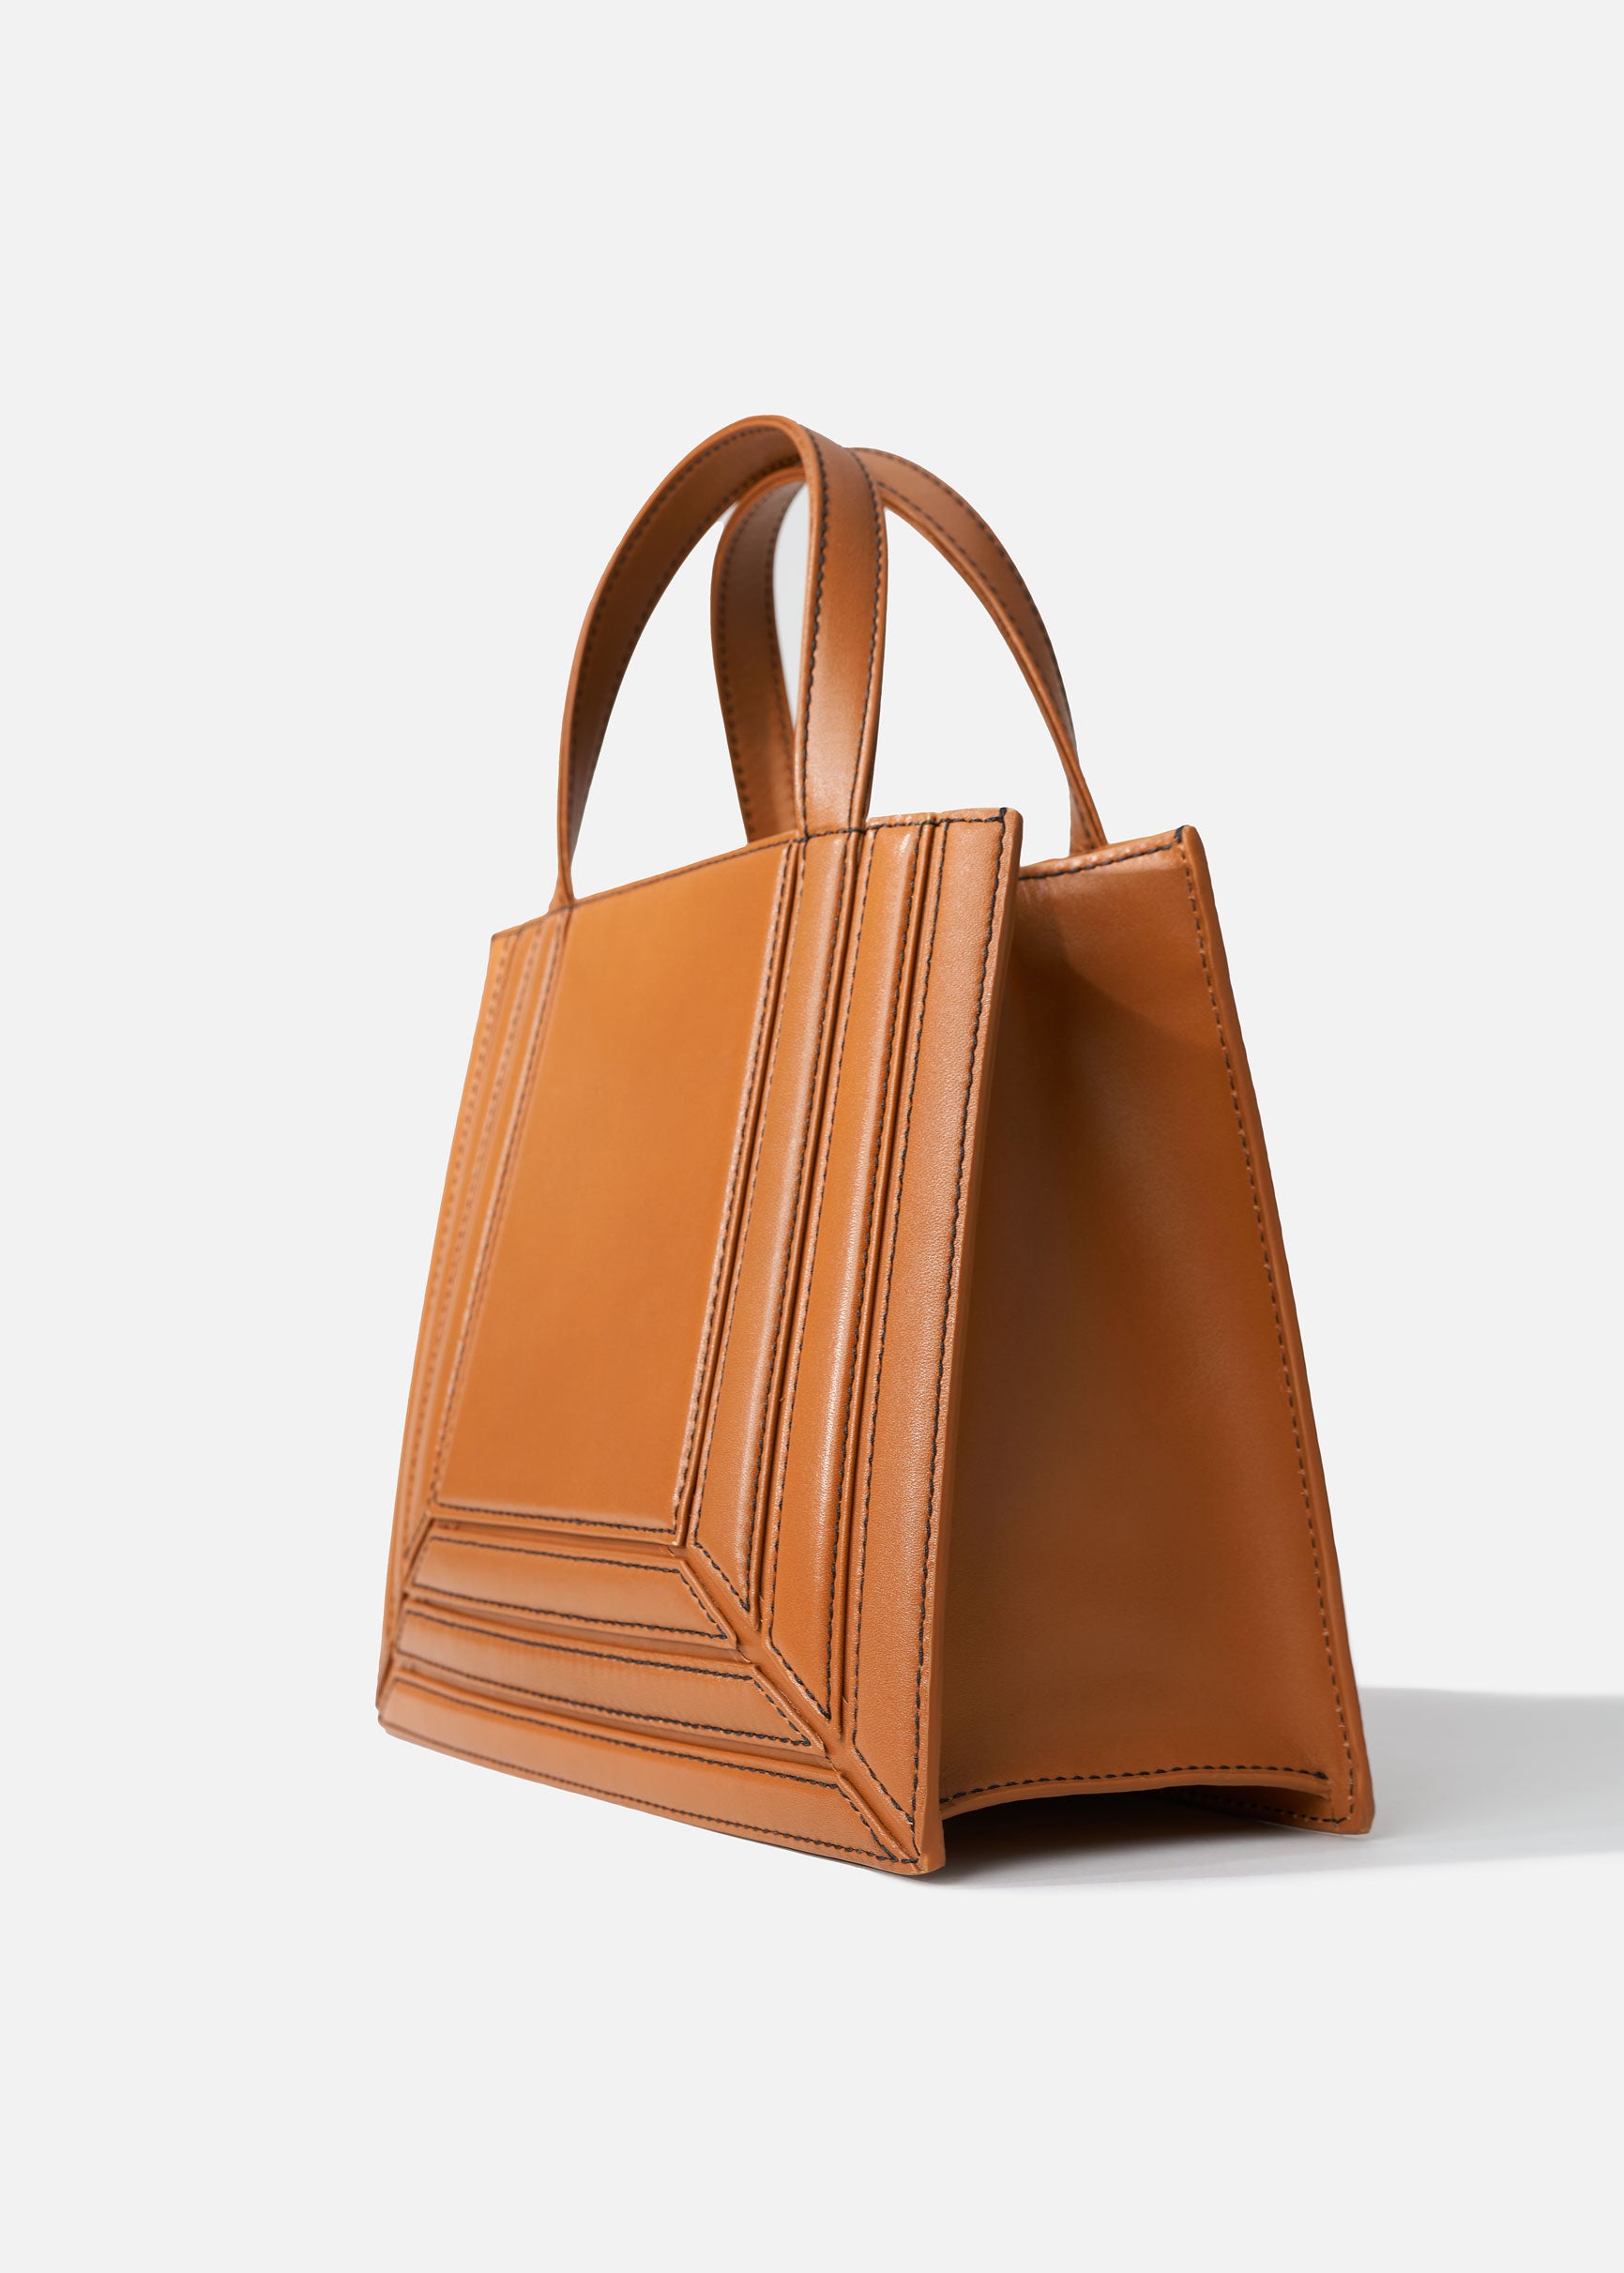 Palladian laramie leather double handle bag in cognac